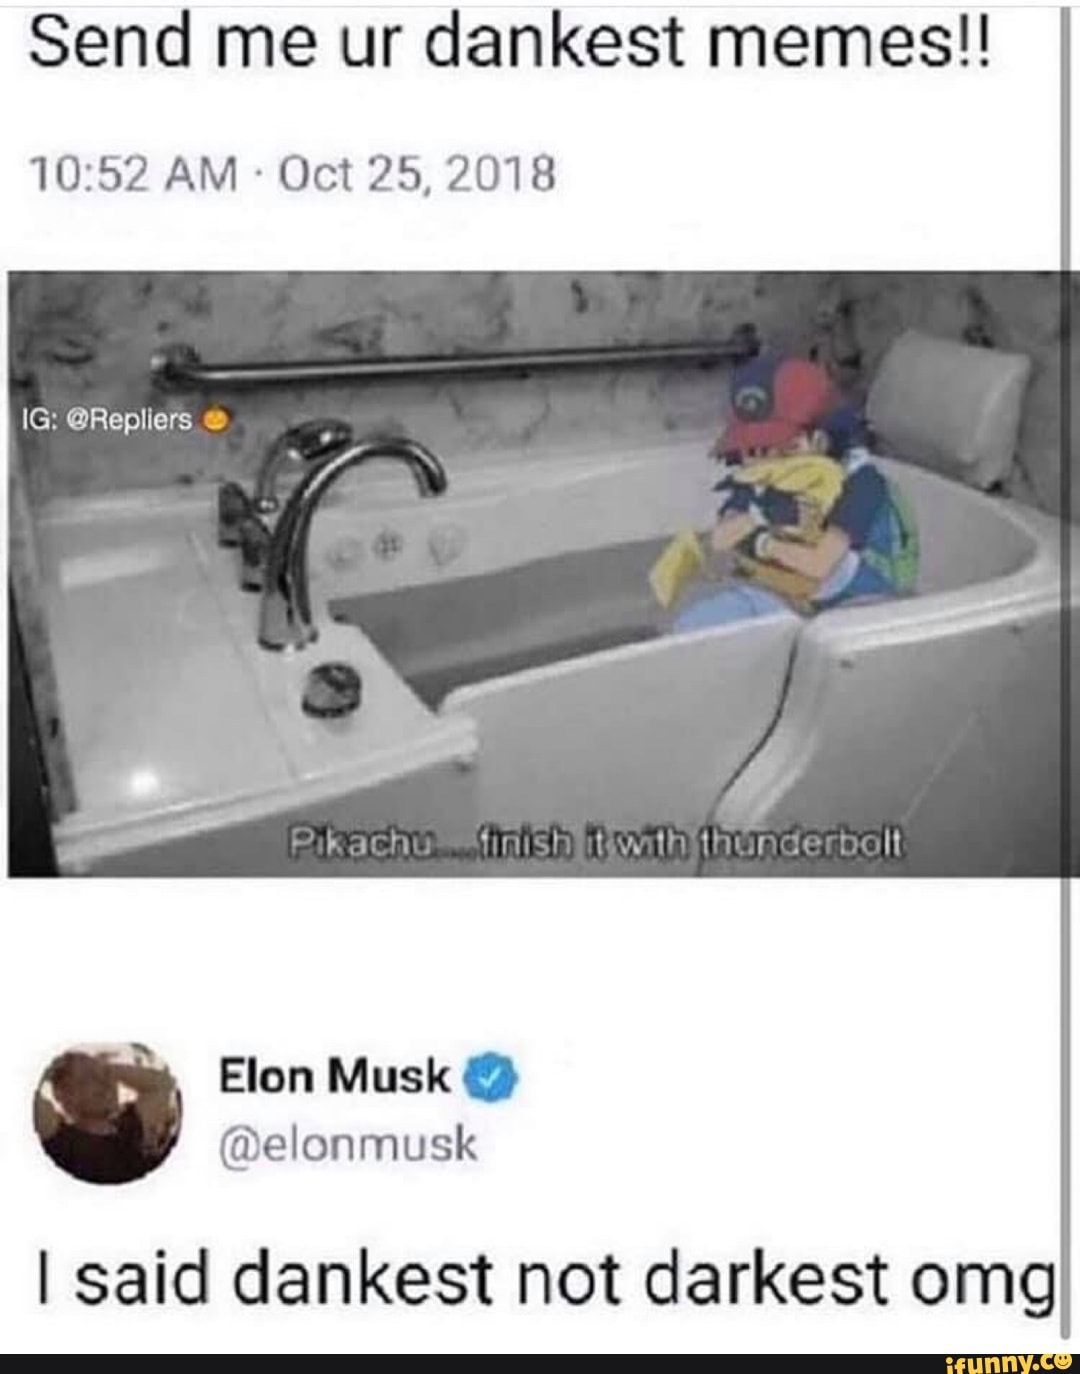 send me your dankest memes - Send me ur dankest memes!! Ig Pikachu...Stinish it with thunderbolt Elon Musk I said dankest not darkest omg ifunny.co